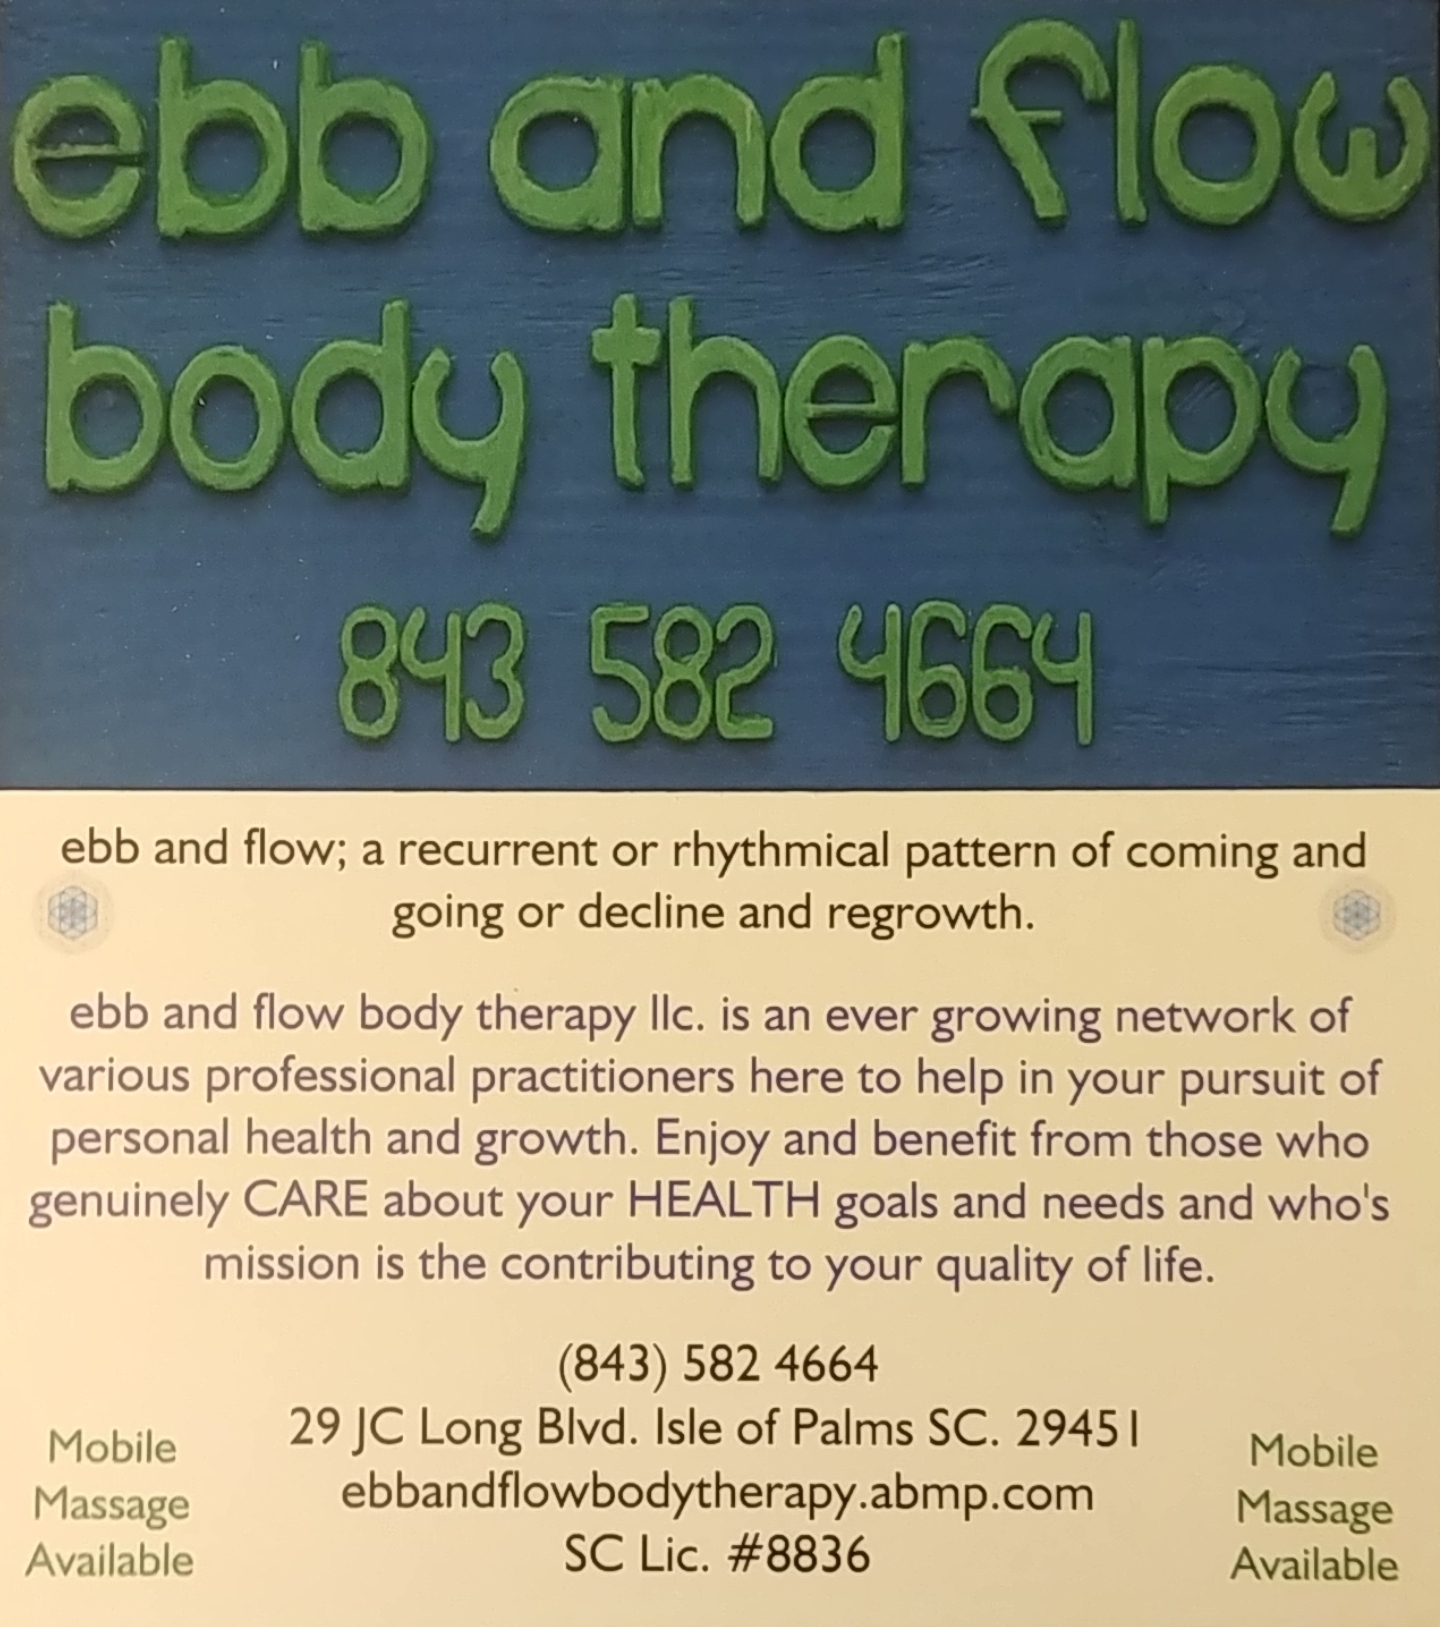 ebb and flow body therapy LLC 29 J C Long Blvd, Isle of Palms South Carolina 29451